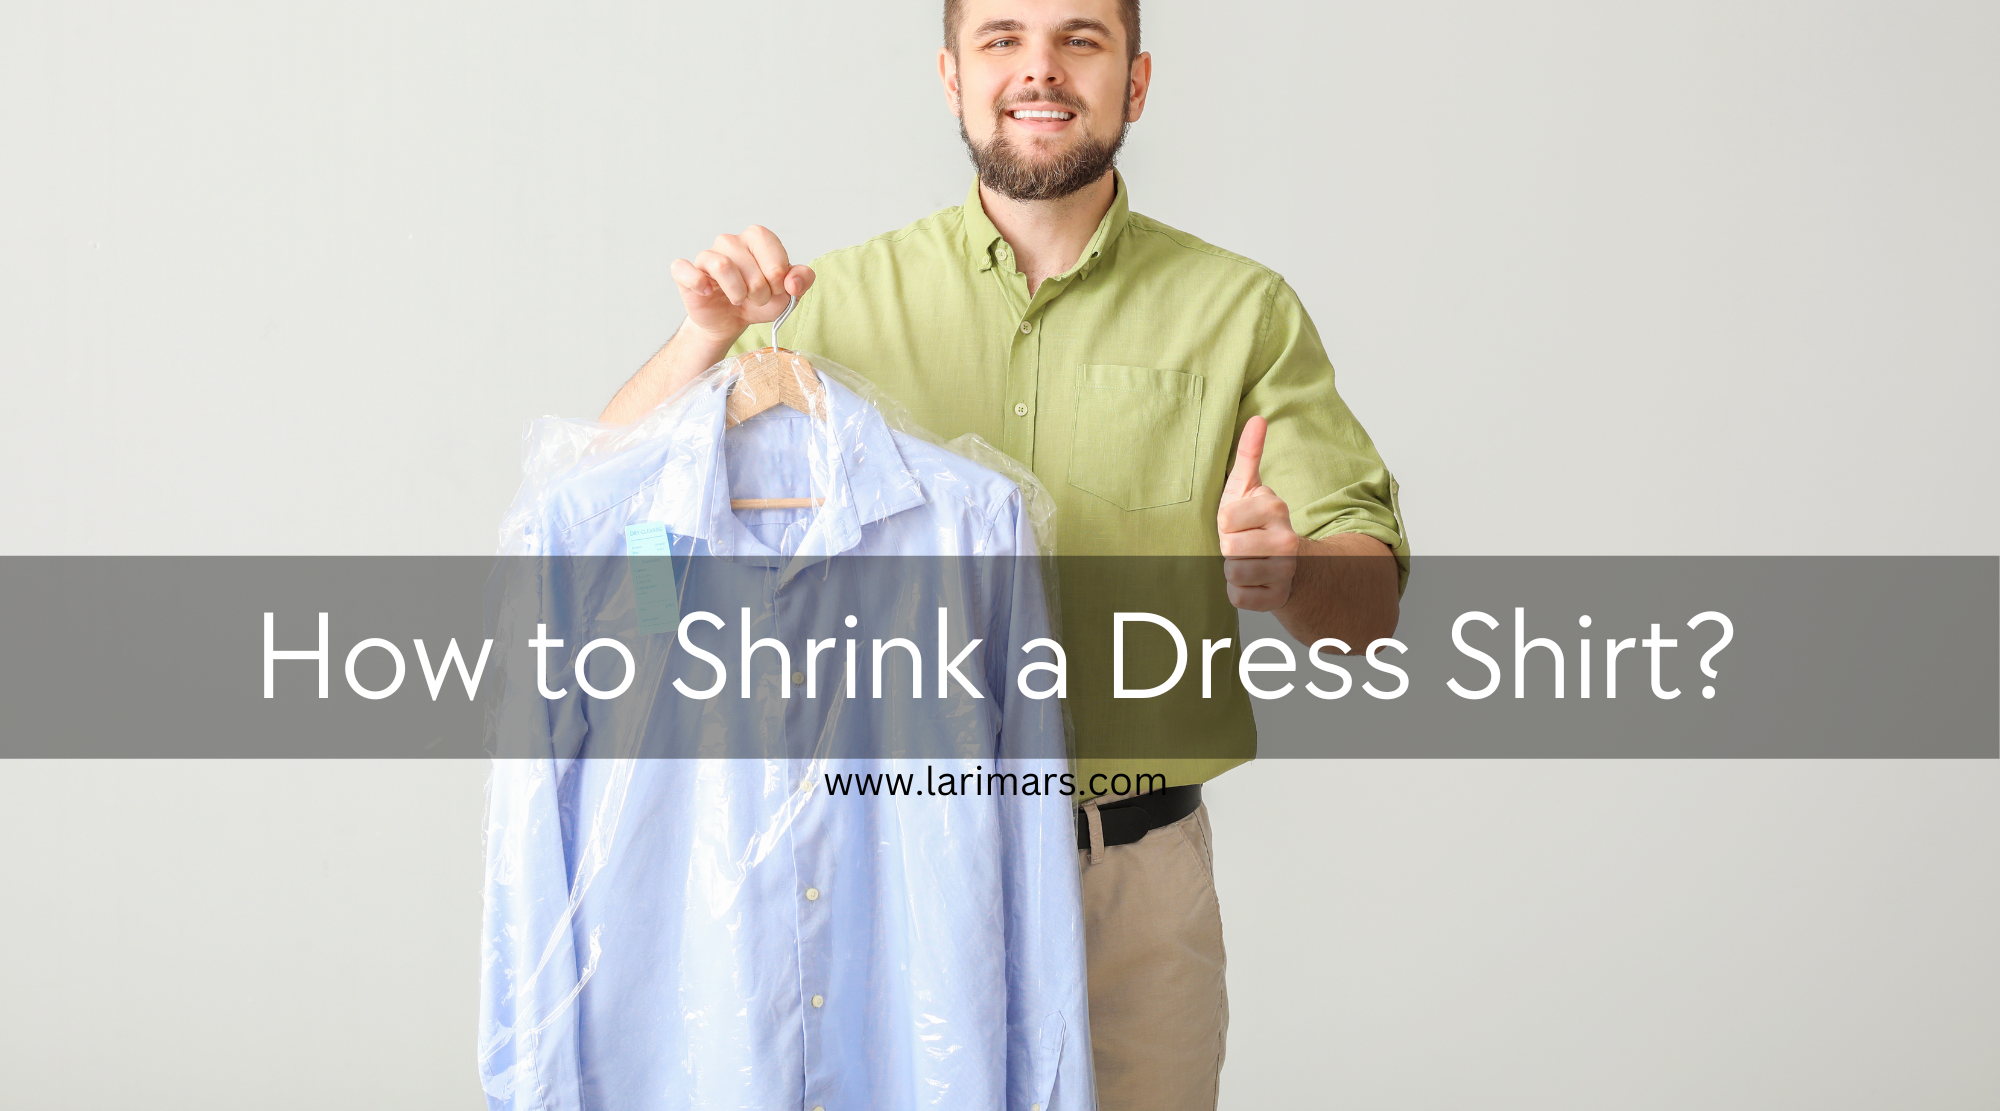 How to Shrink a Dress Shirt